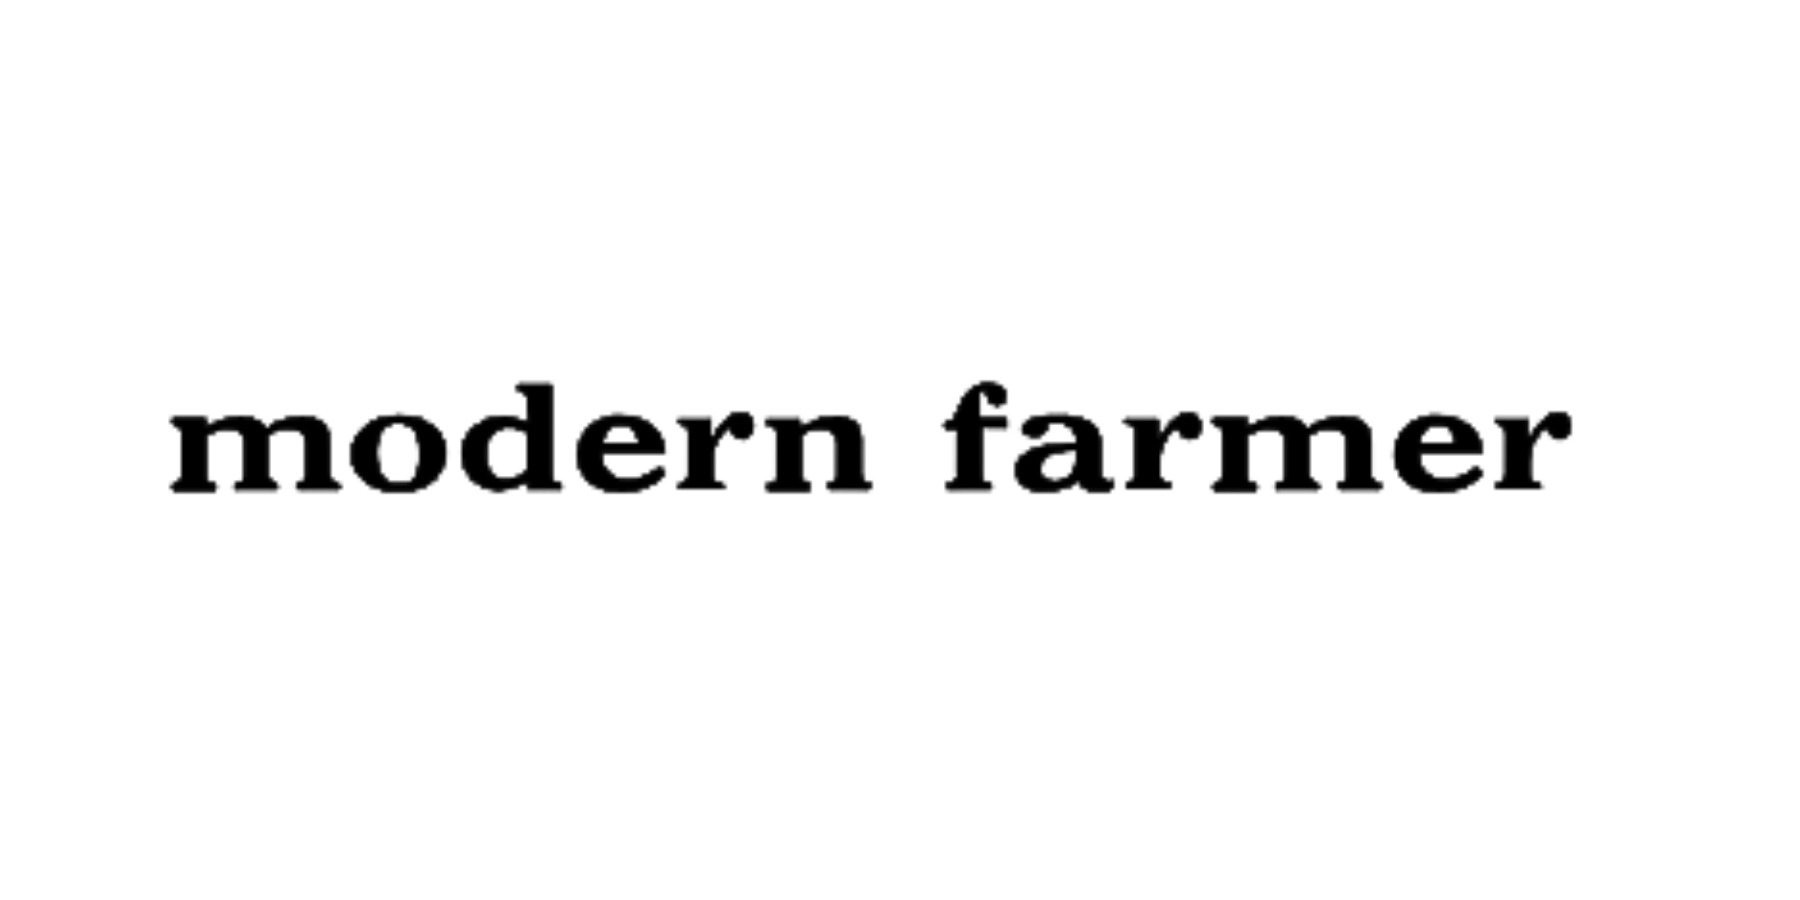 The Modern Farmer Logo for article written about chaga featuring Garrett Kopp of Birch Boys